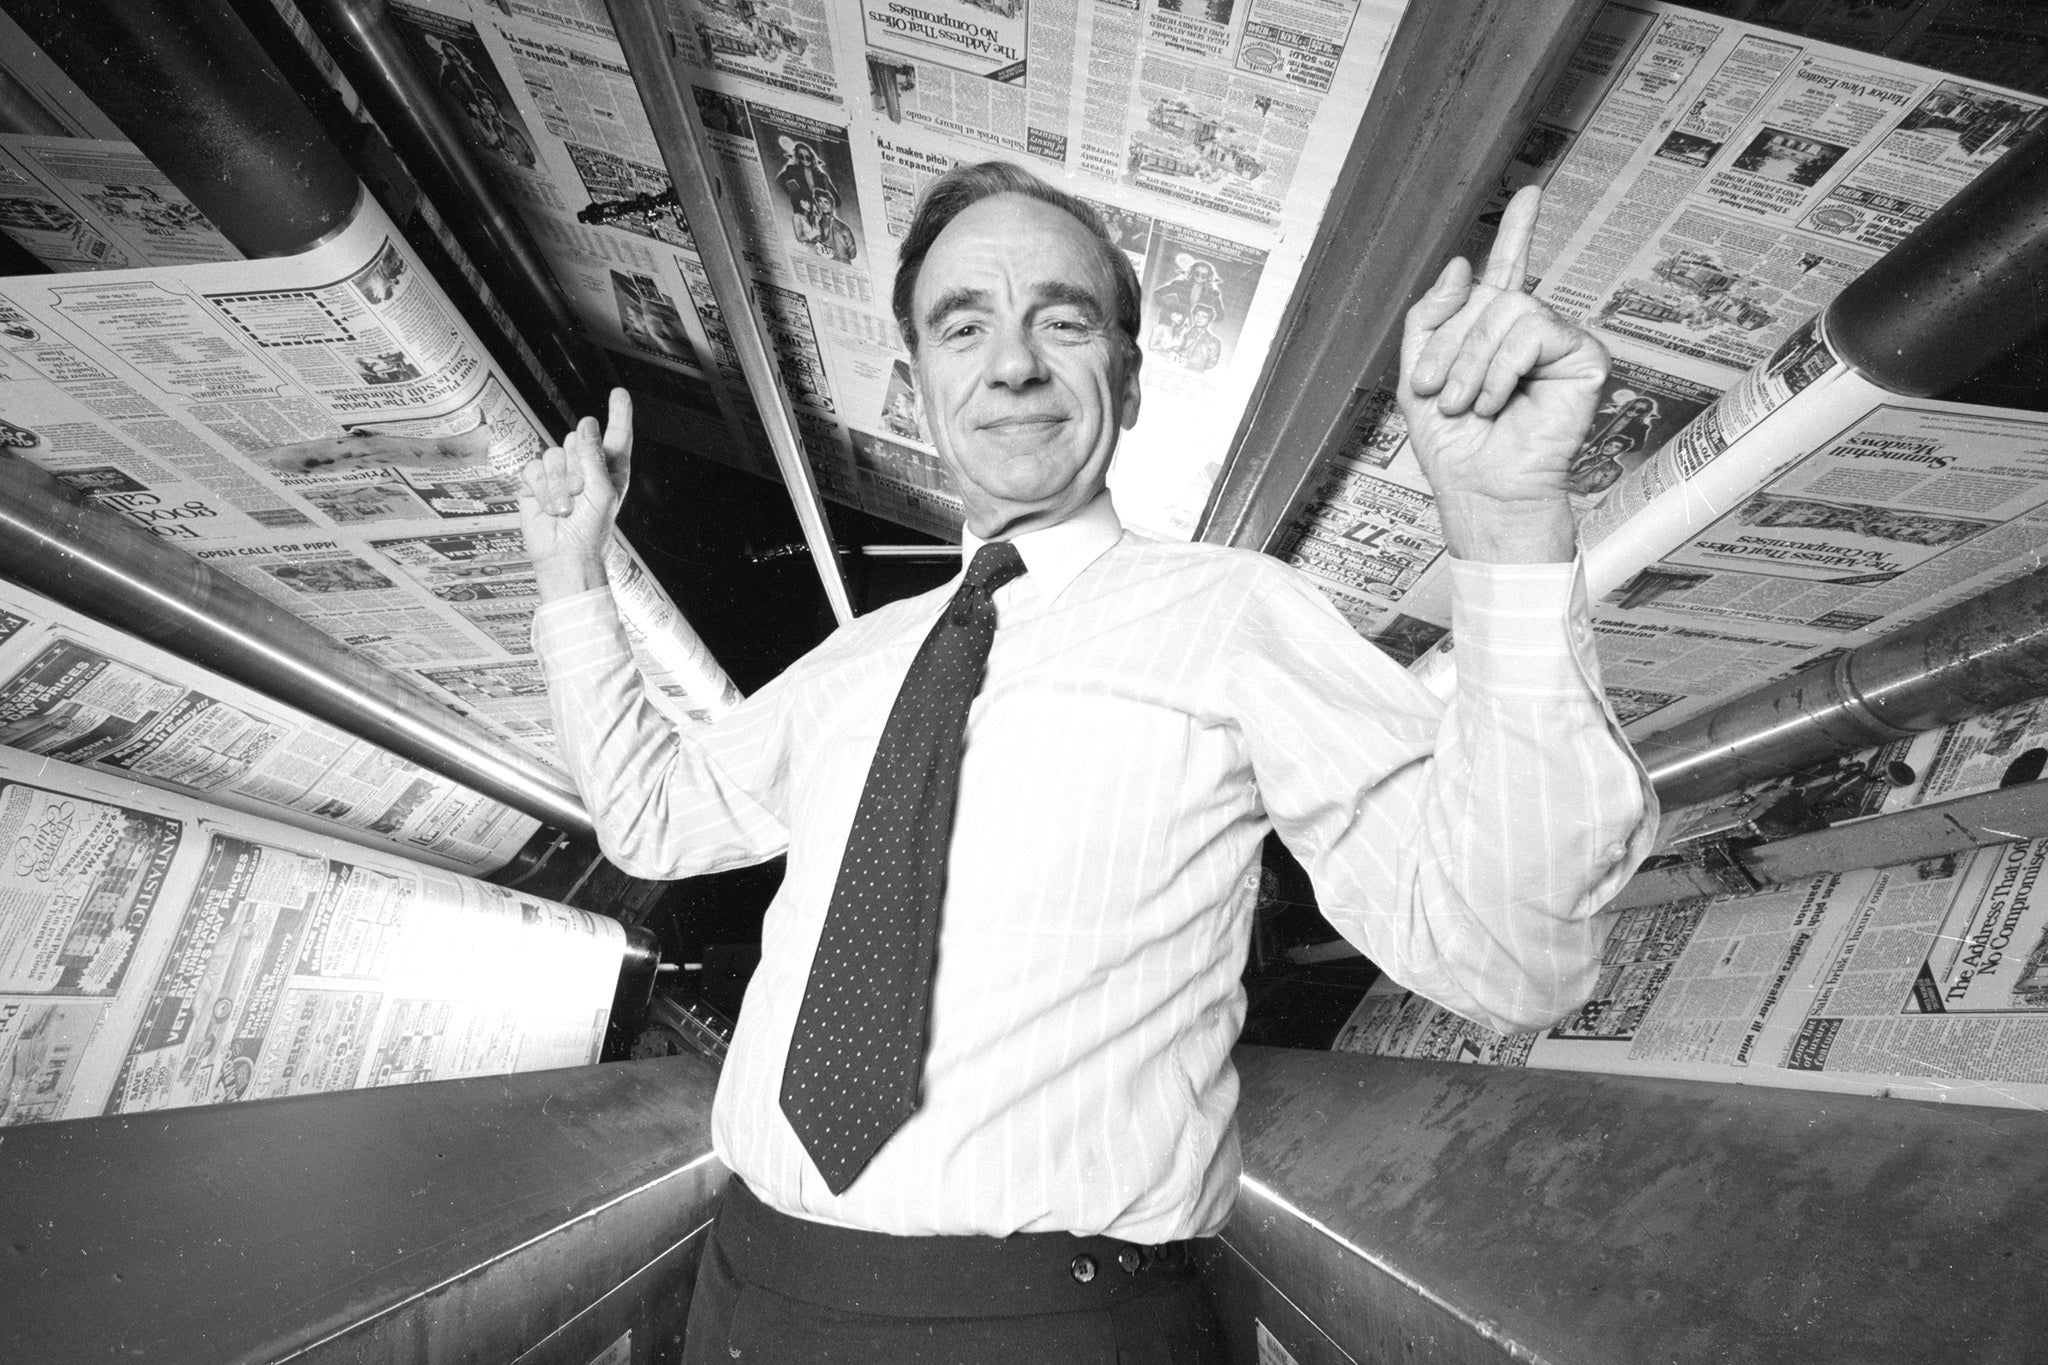 Billionaire newspaper magnate Rupert Murdoch watches his presses roll, in 1985